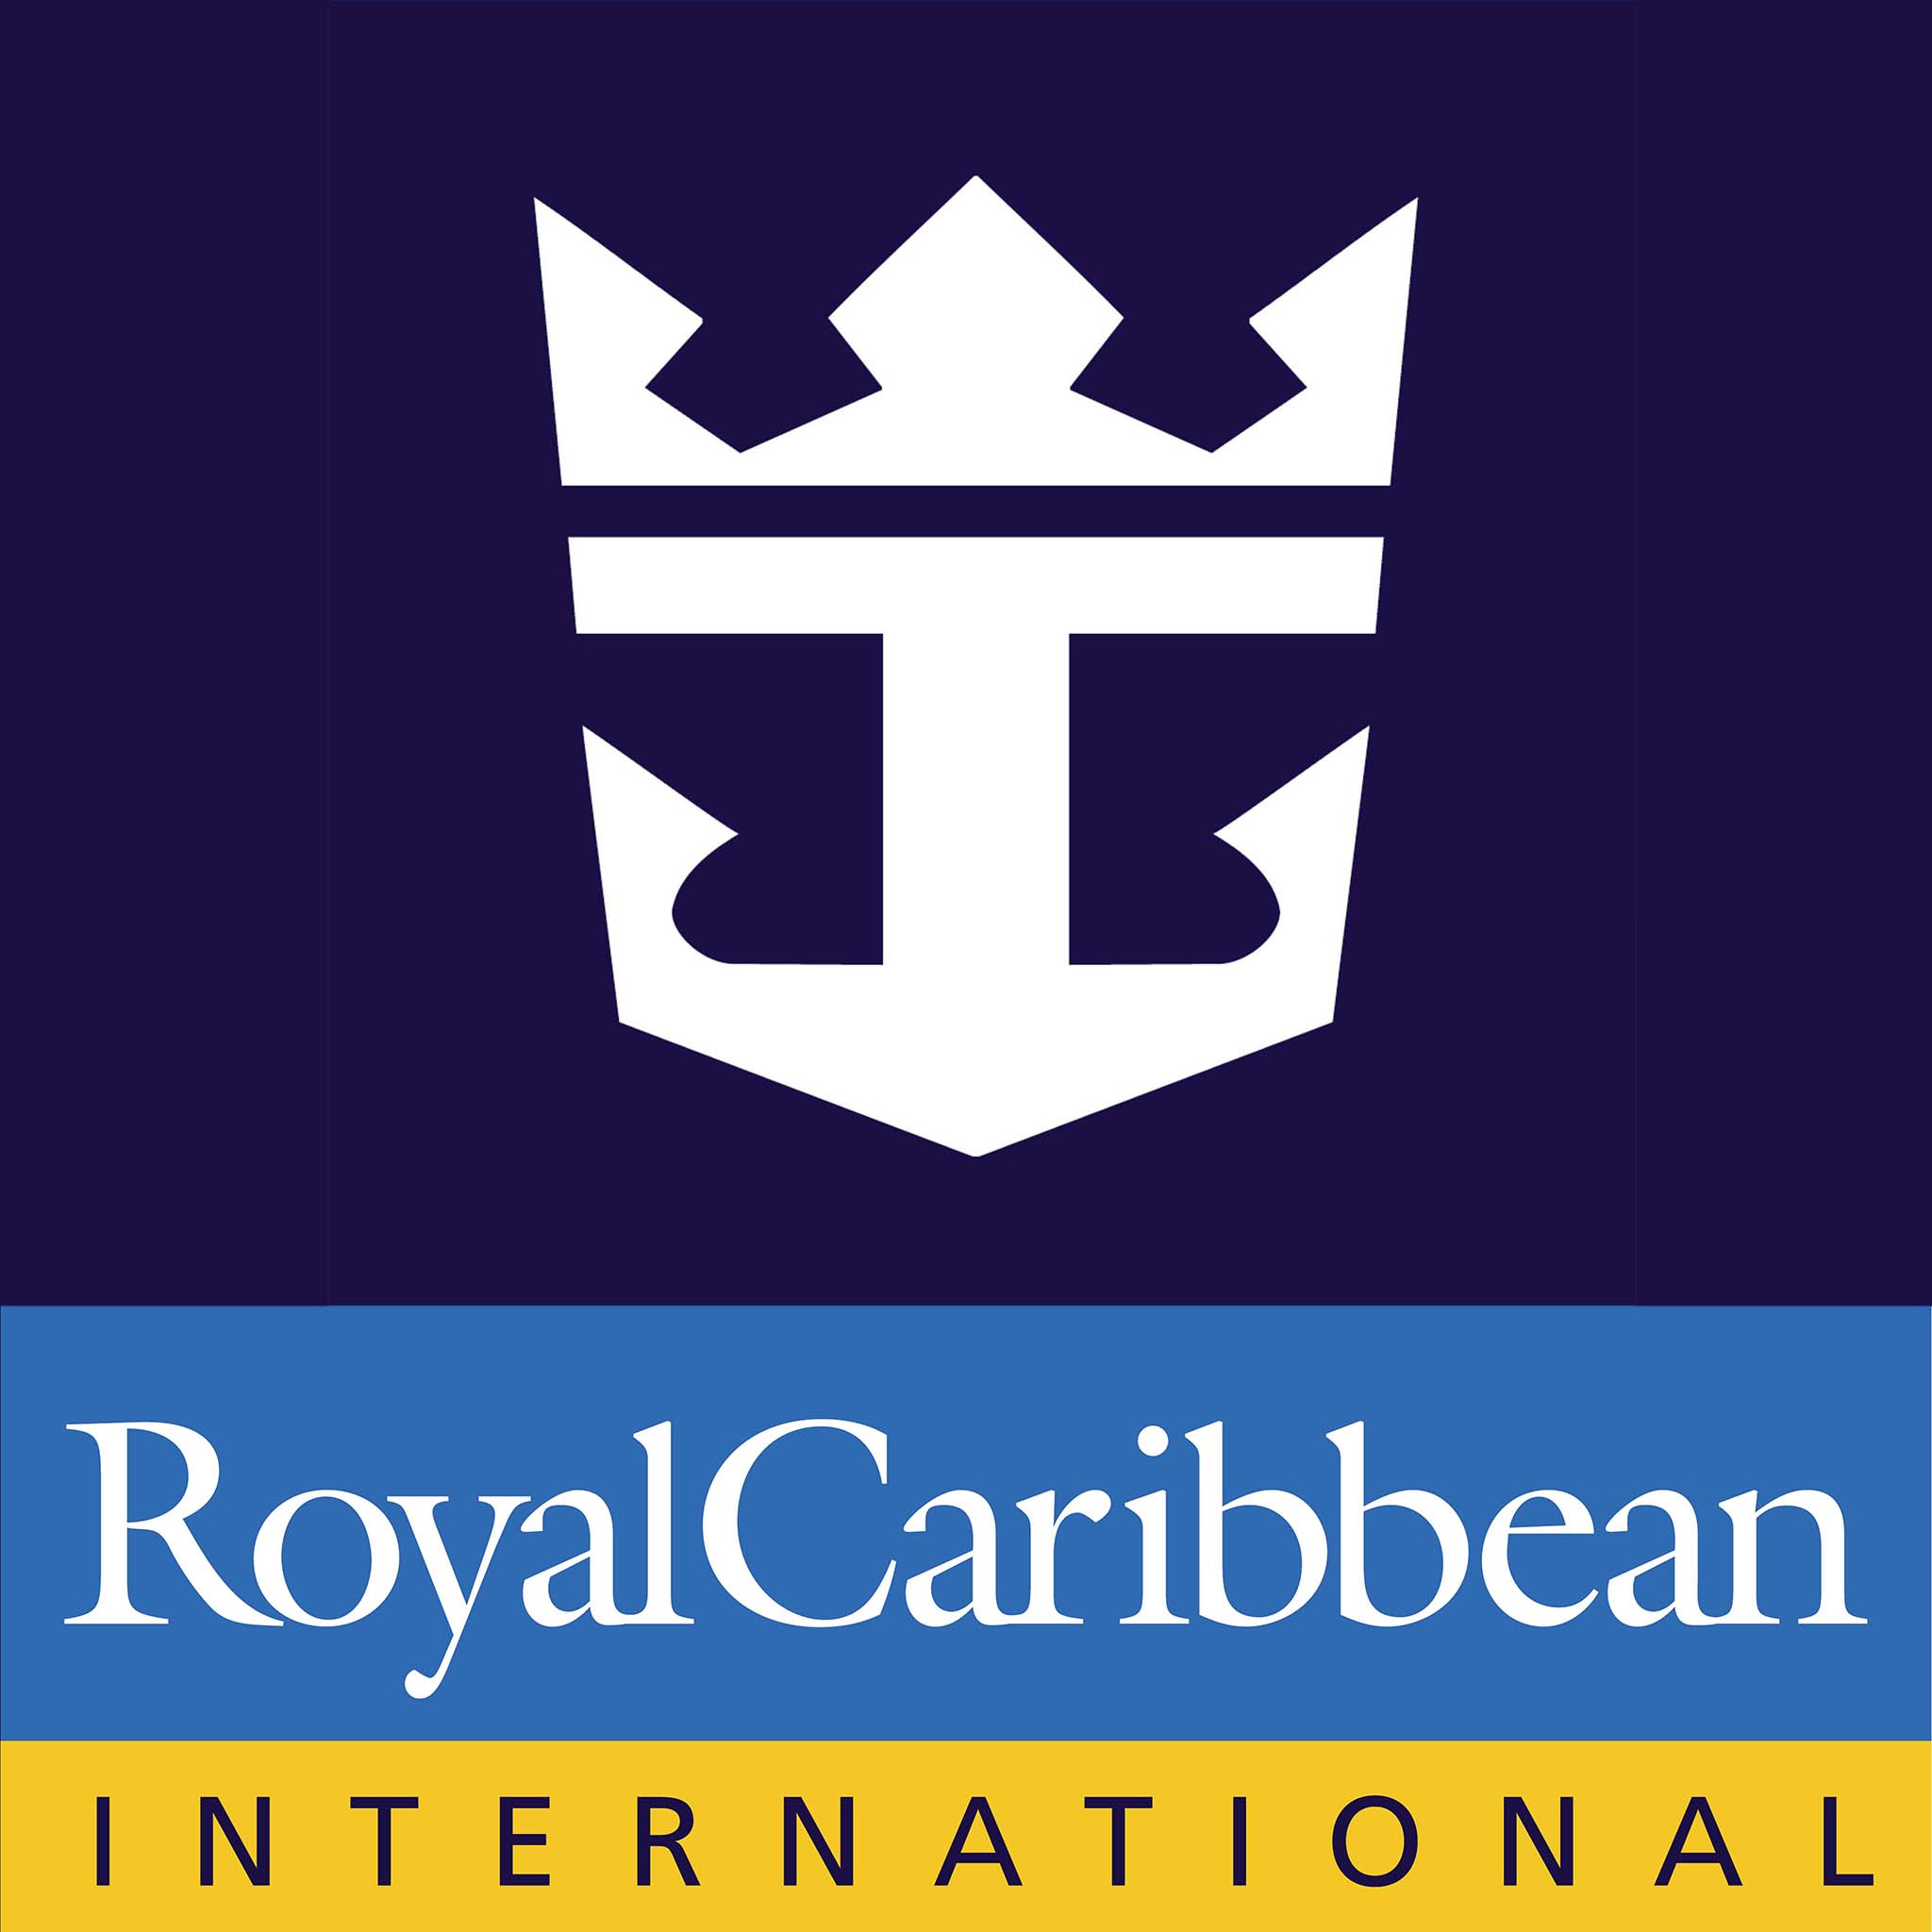 caribbean cruises sign in